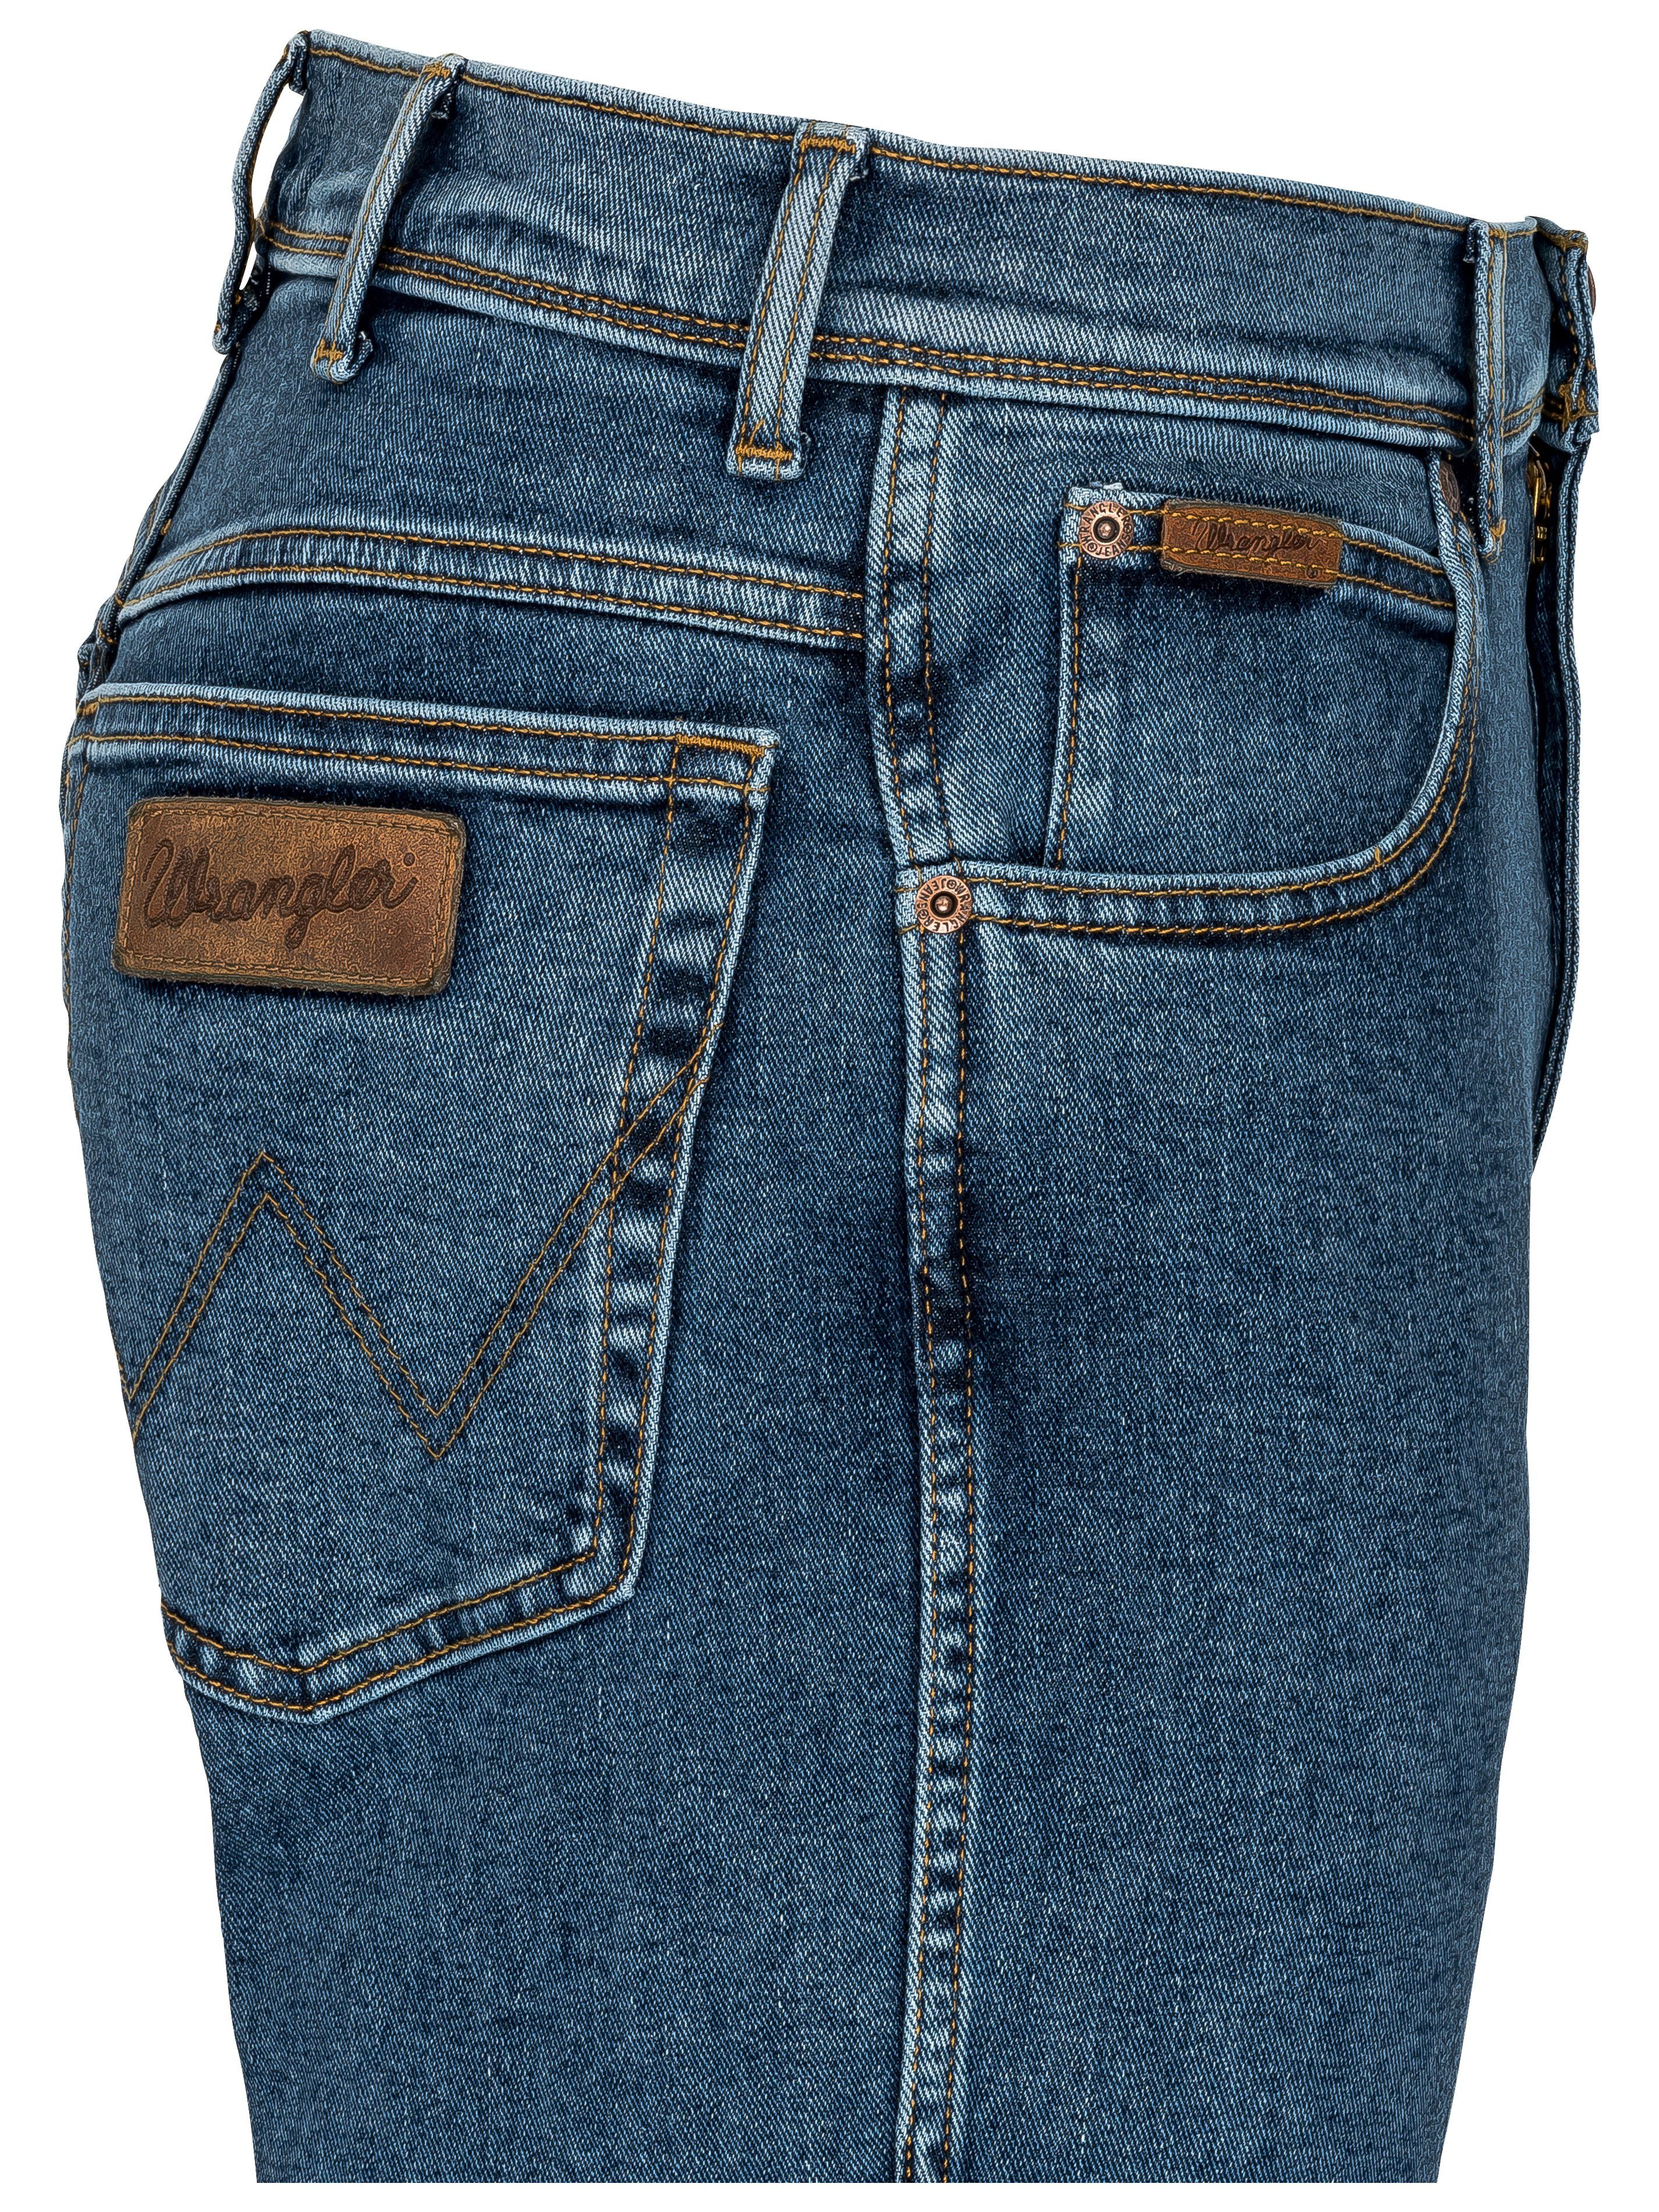 mit Jeans Straight Texas Authentic Straight-Jeans Gürtel Stonewash Wrangler Stretch Gürtel brauner Herrenjeans +